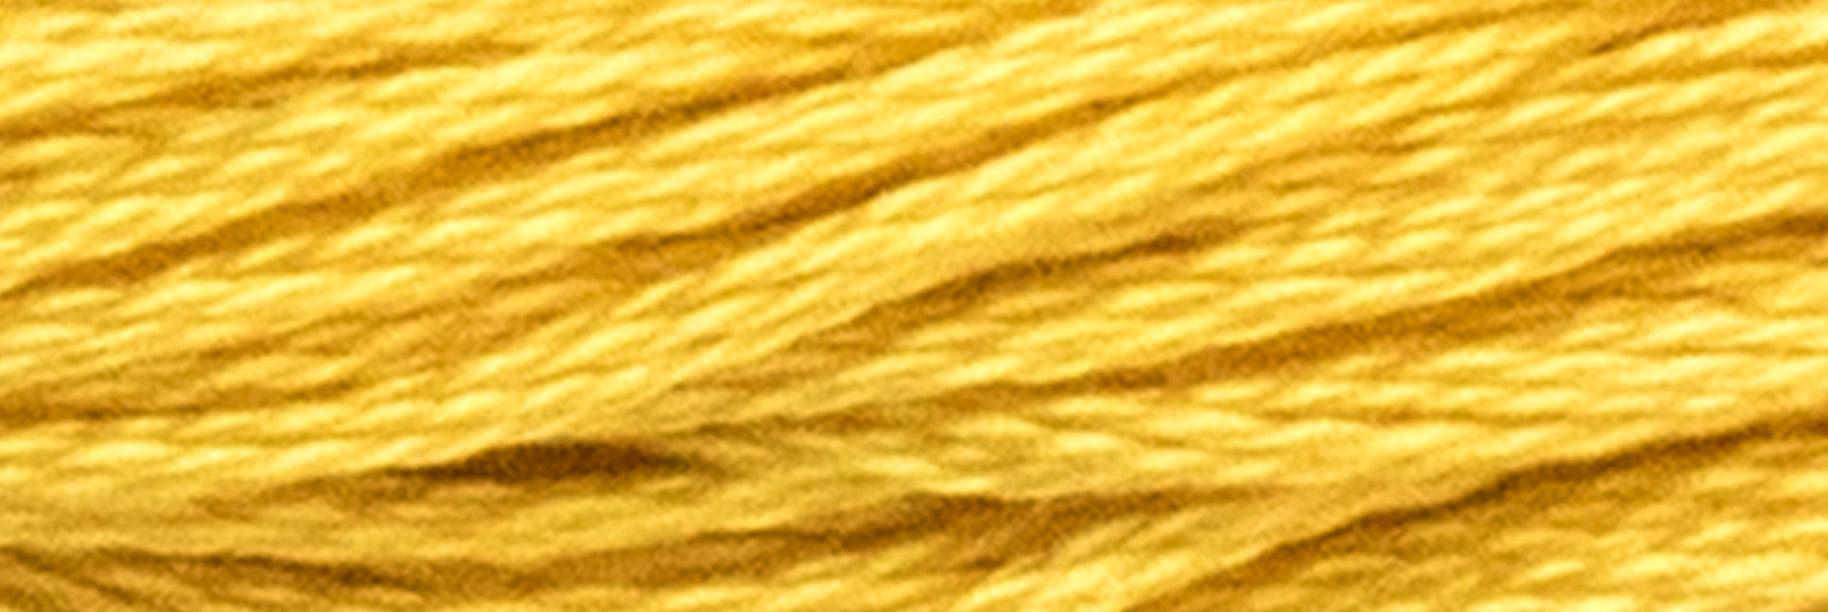 Stranded Cotton Luca-S - 344 / DMC 3821 / Anchor 305 Stranded Cotton - HobbyJobby